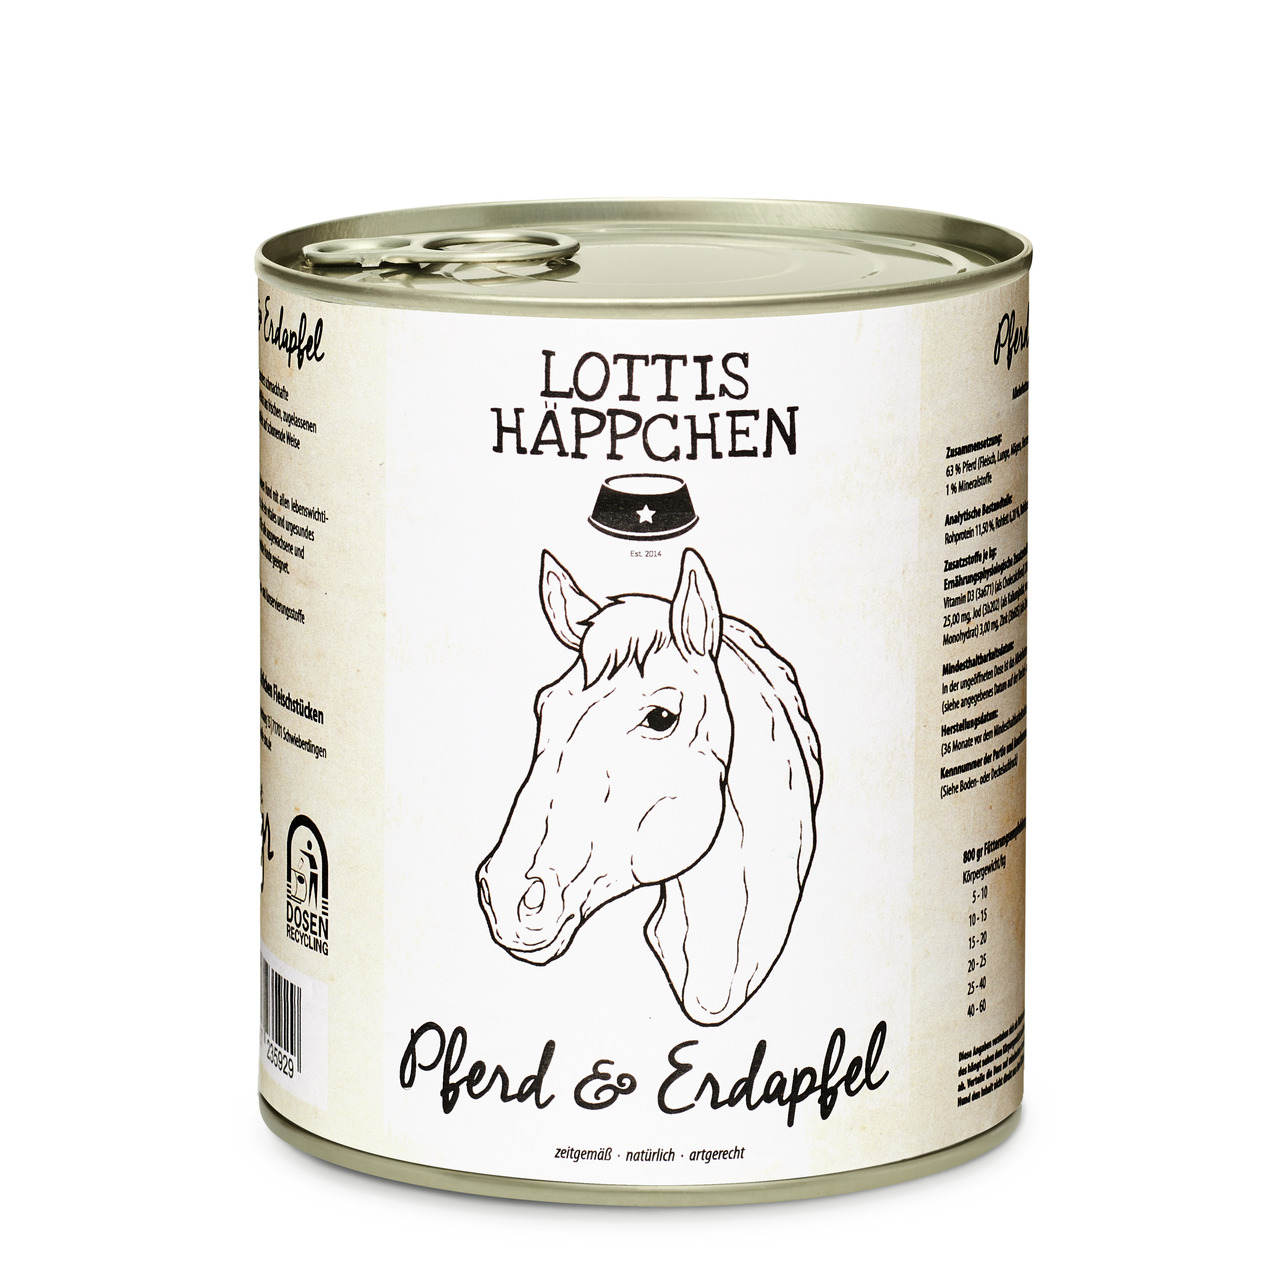 Lottis Häppchen Pferd/Erdapfel 800g